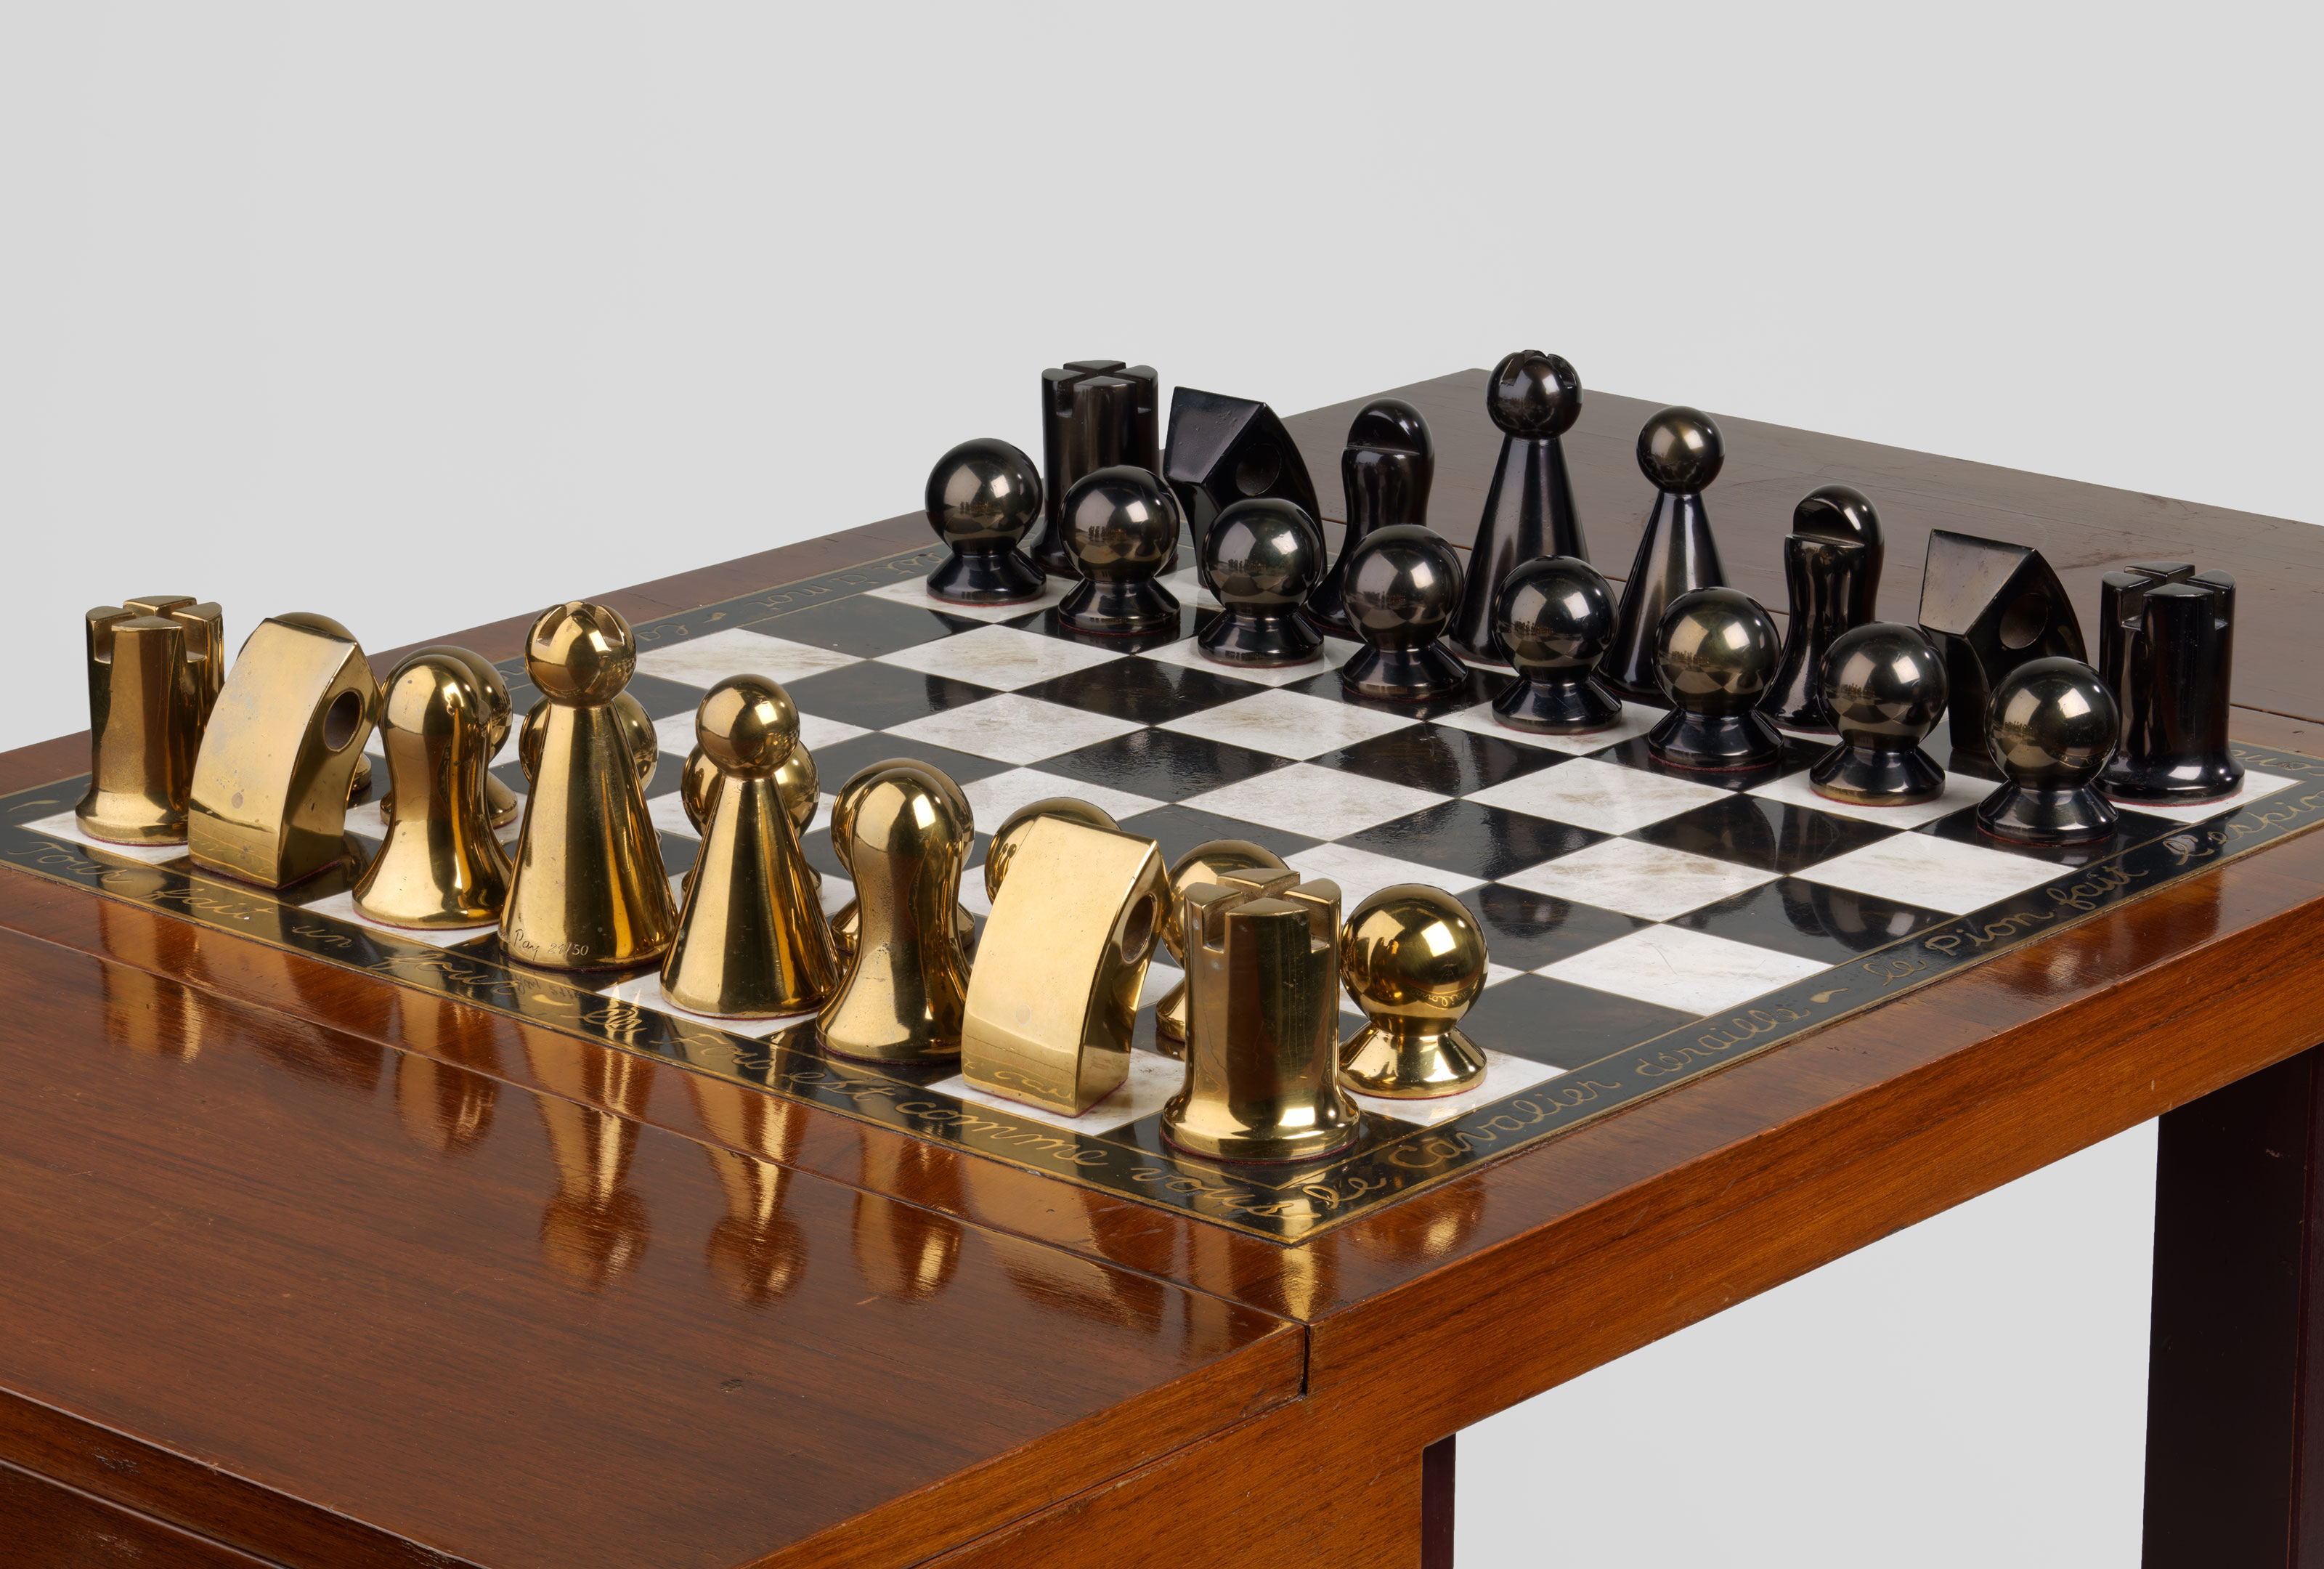 Man Ray: Chess Set and Table - Prahlad Bubbar.